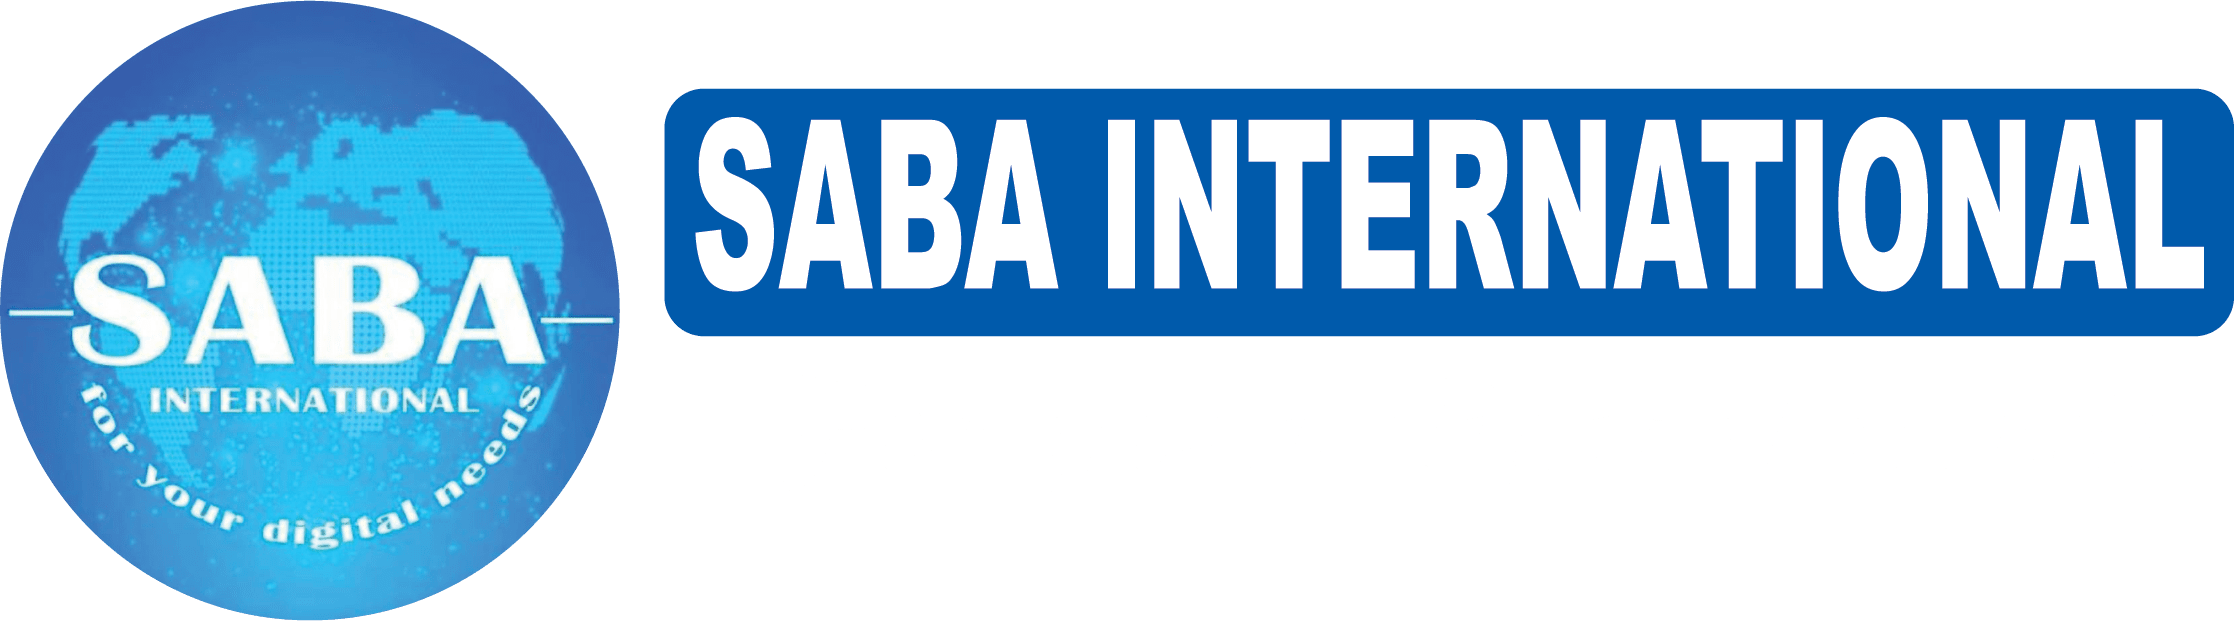 SABA INTERNATIONAL